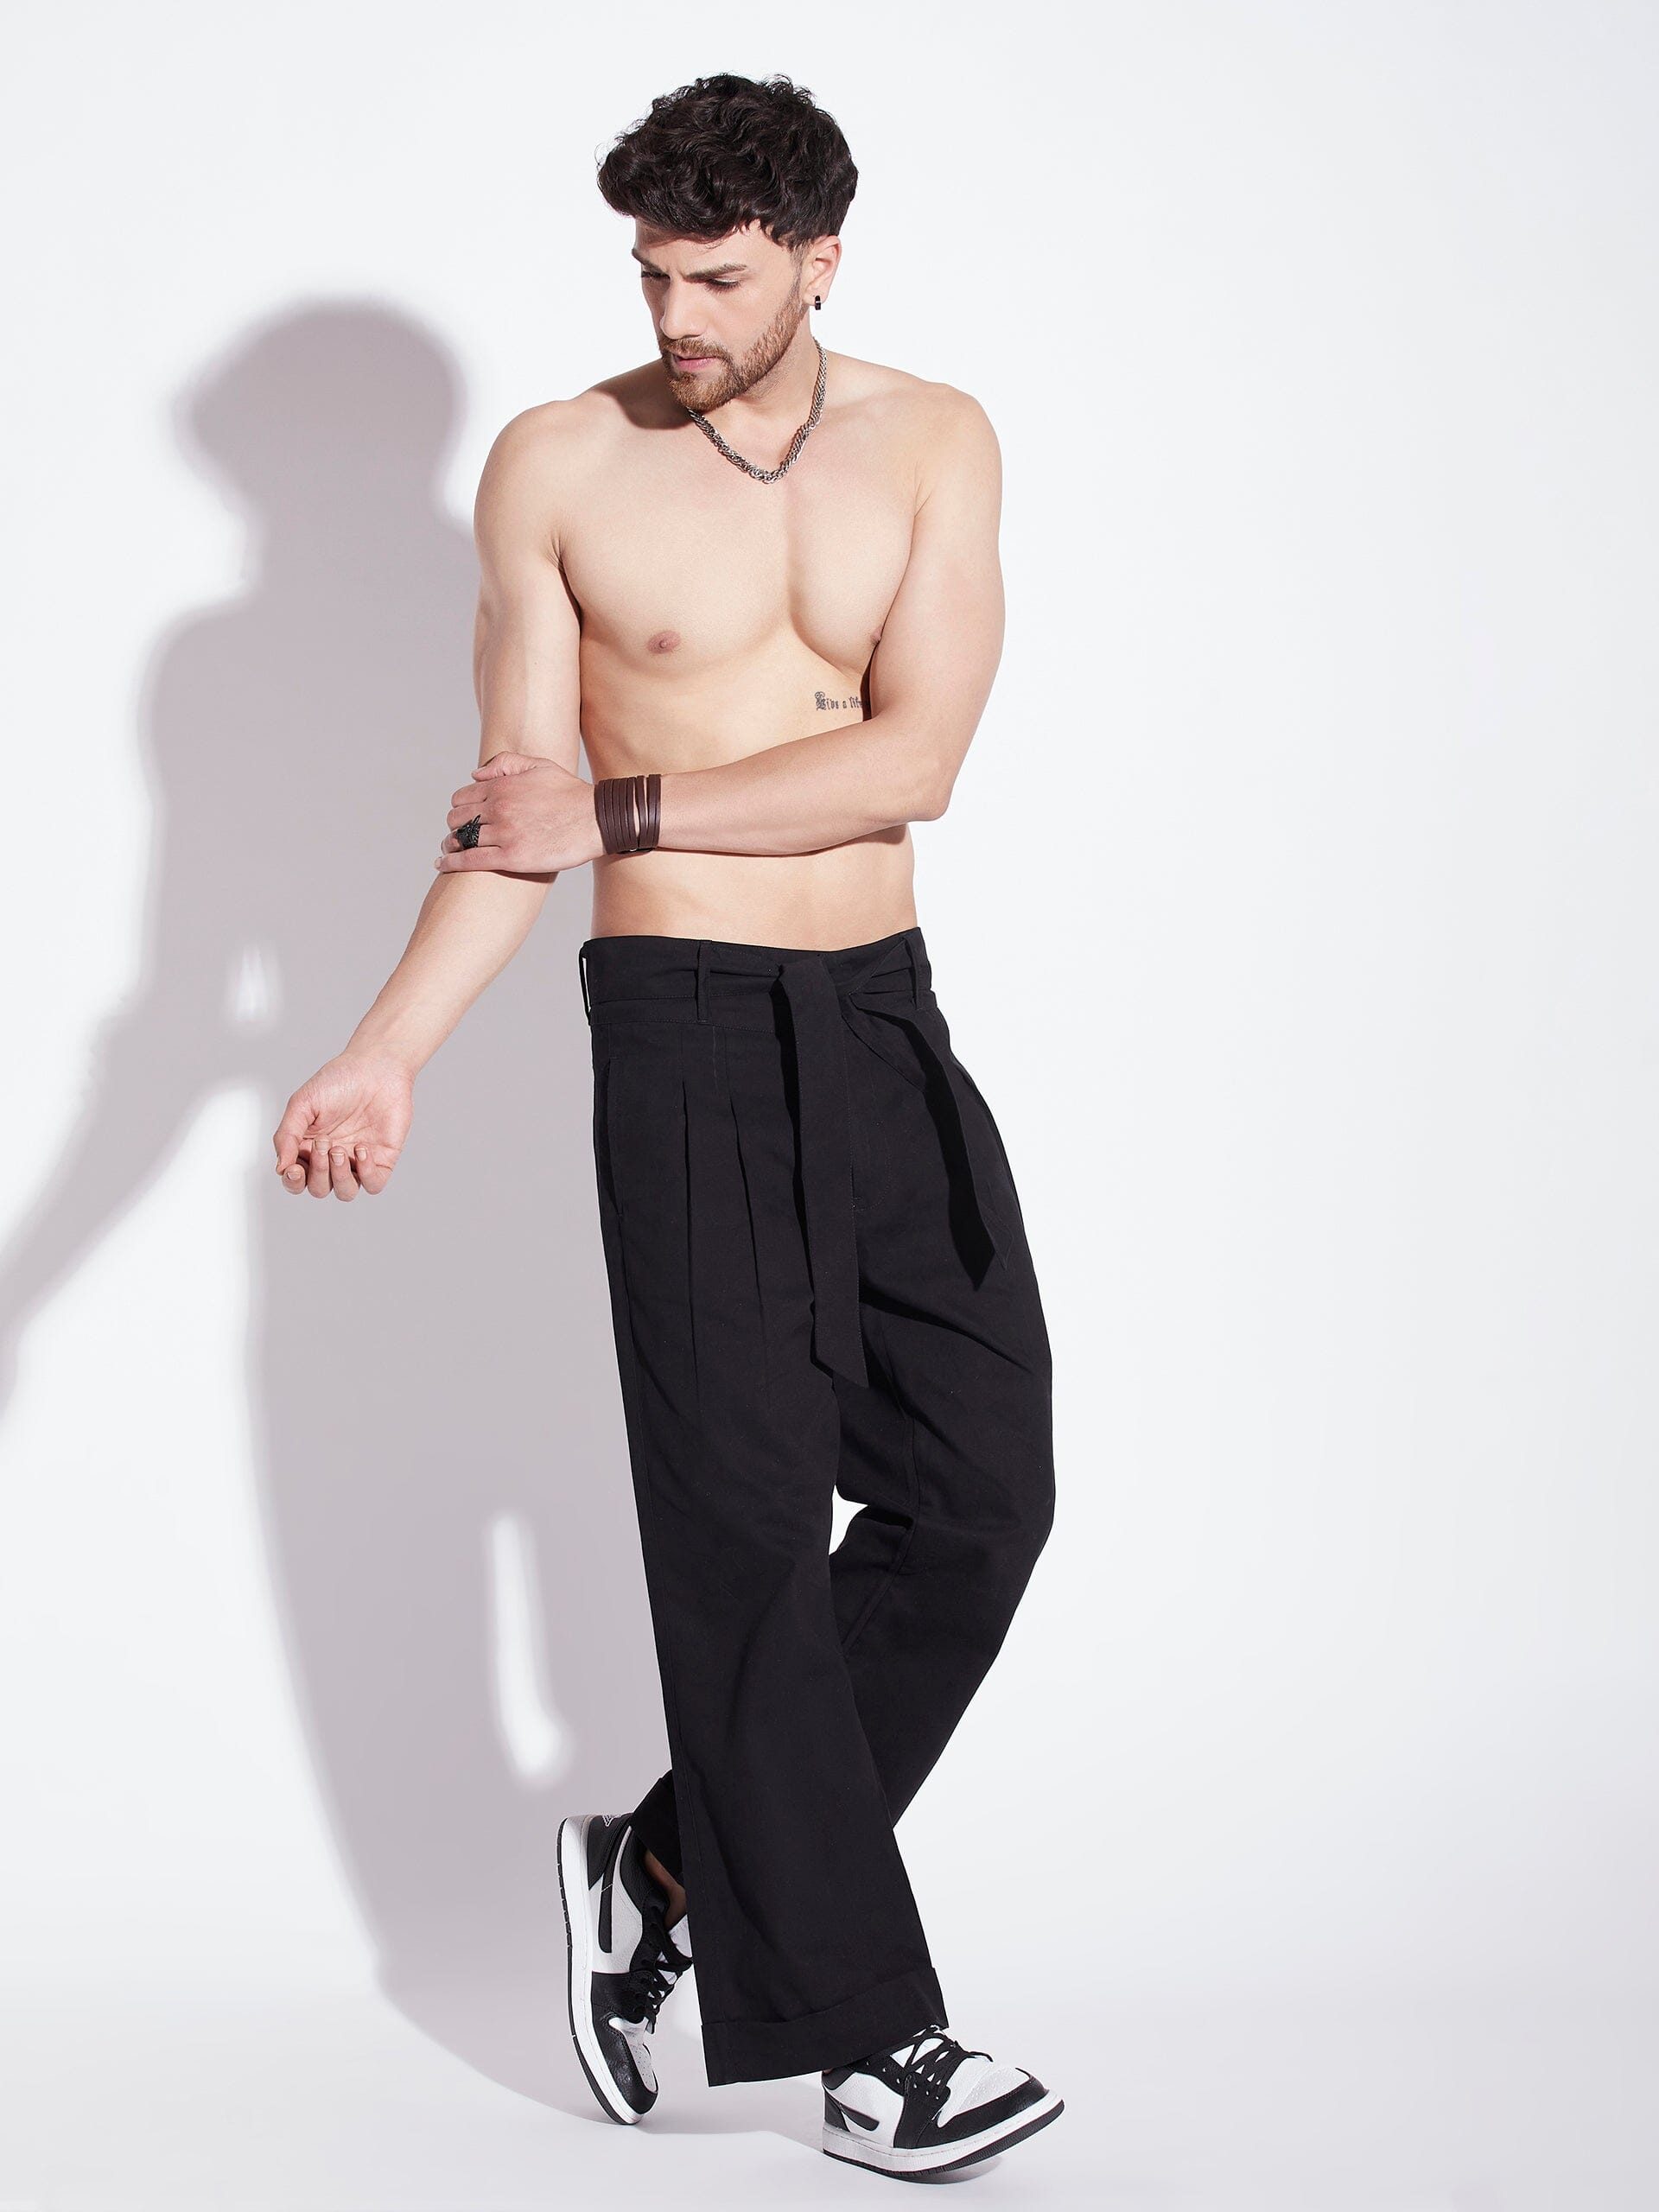 Baggy pants outfit ideas for men #jktiktokshop #tiktokbudol #tiktokbud... |  TikTok